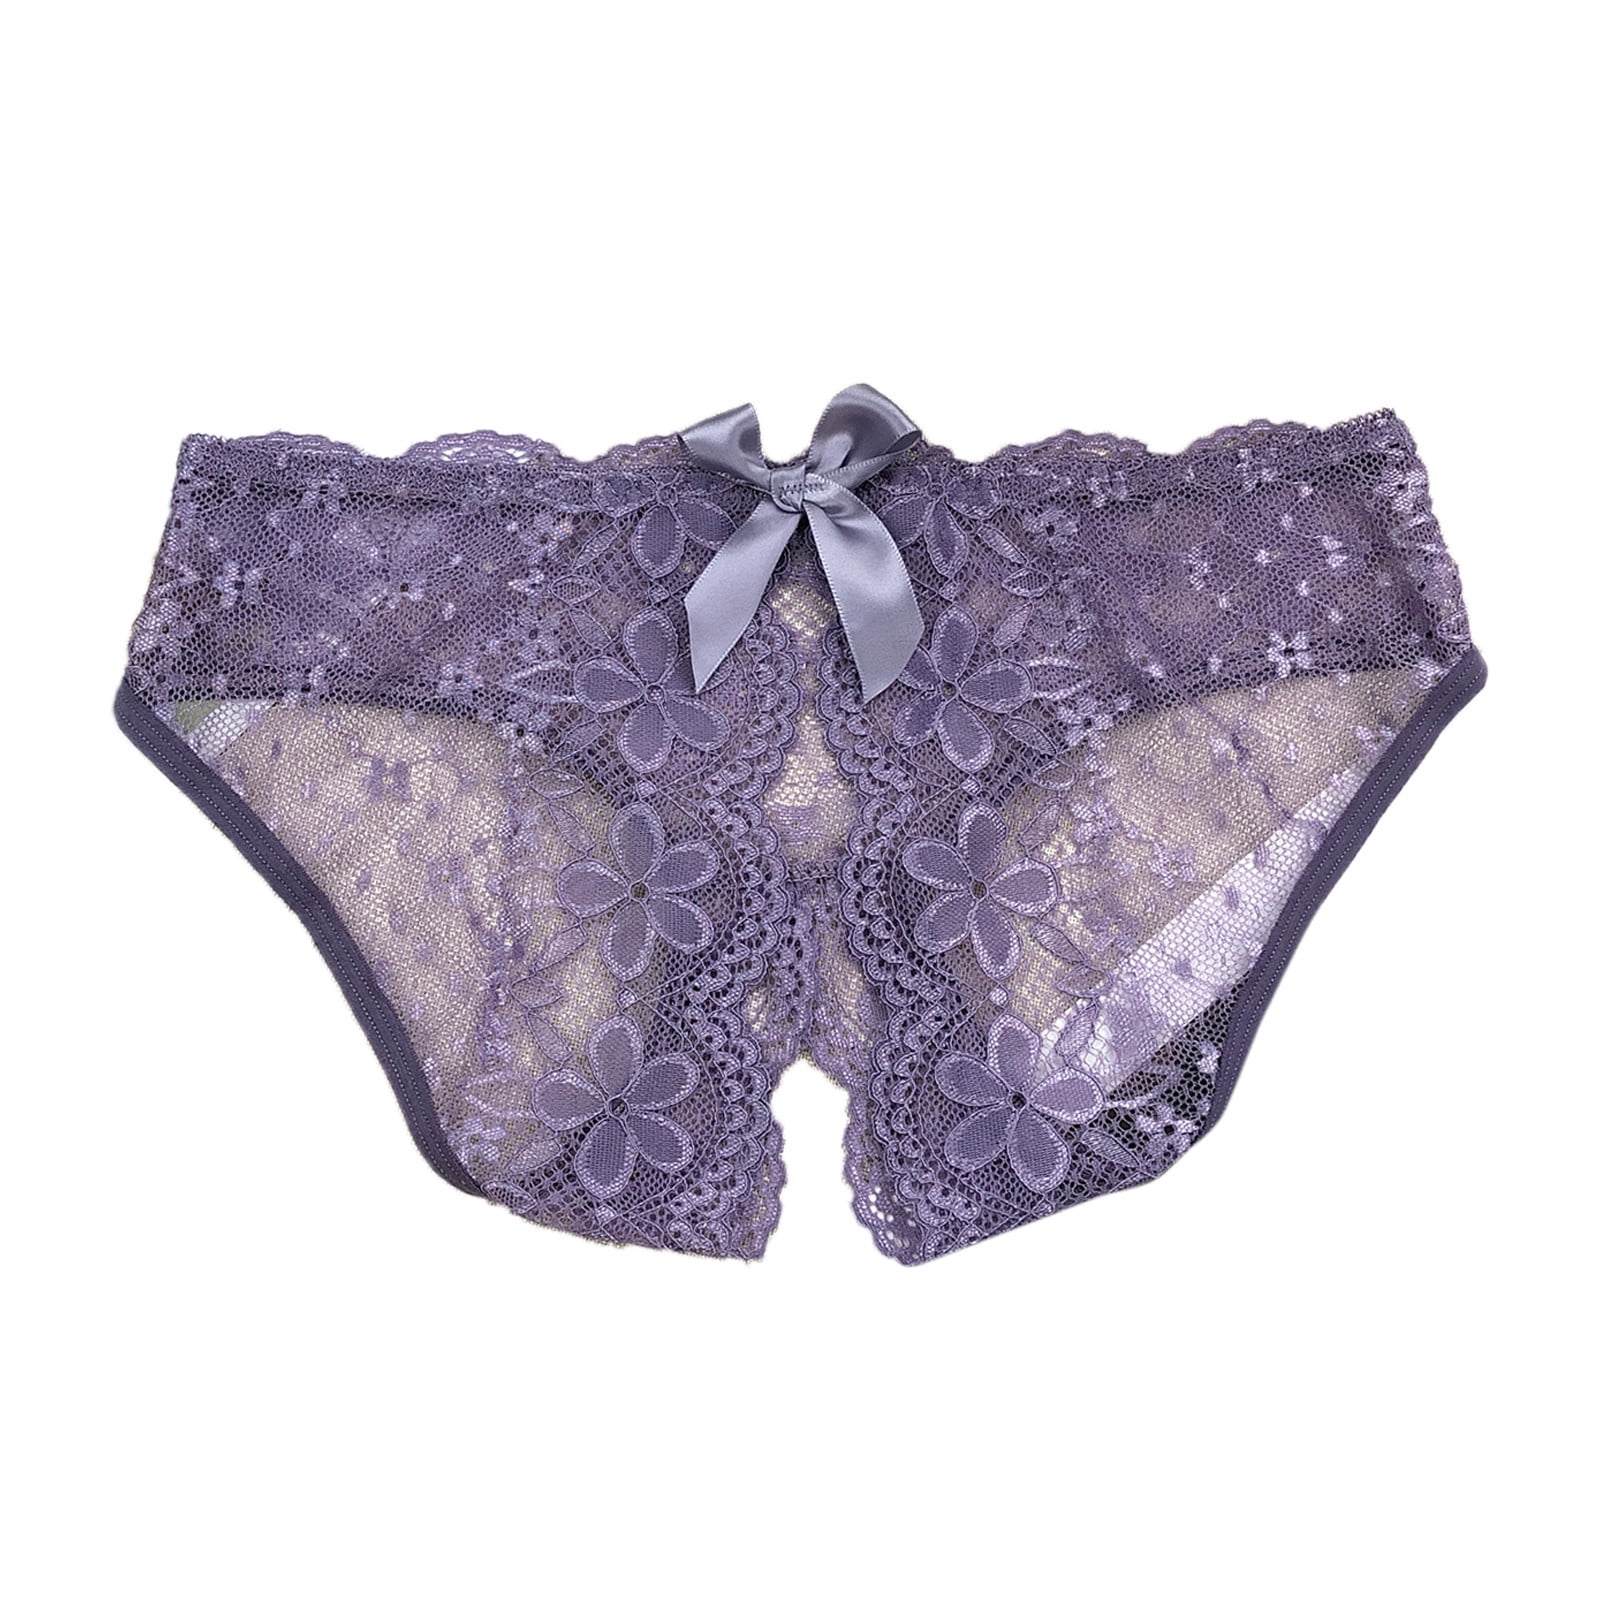 Buy myaddiction Women's Flower Underpants T-Back Underwear Ladies Lingerie  Bikini Panties Purple Clothing, Shoes Accessories, Womens Clothing, Intimates Sleep